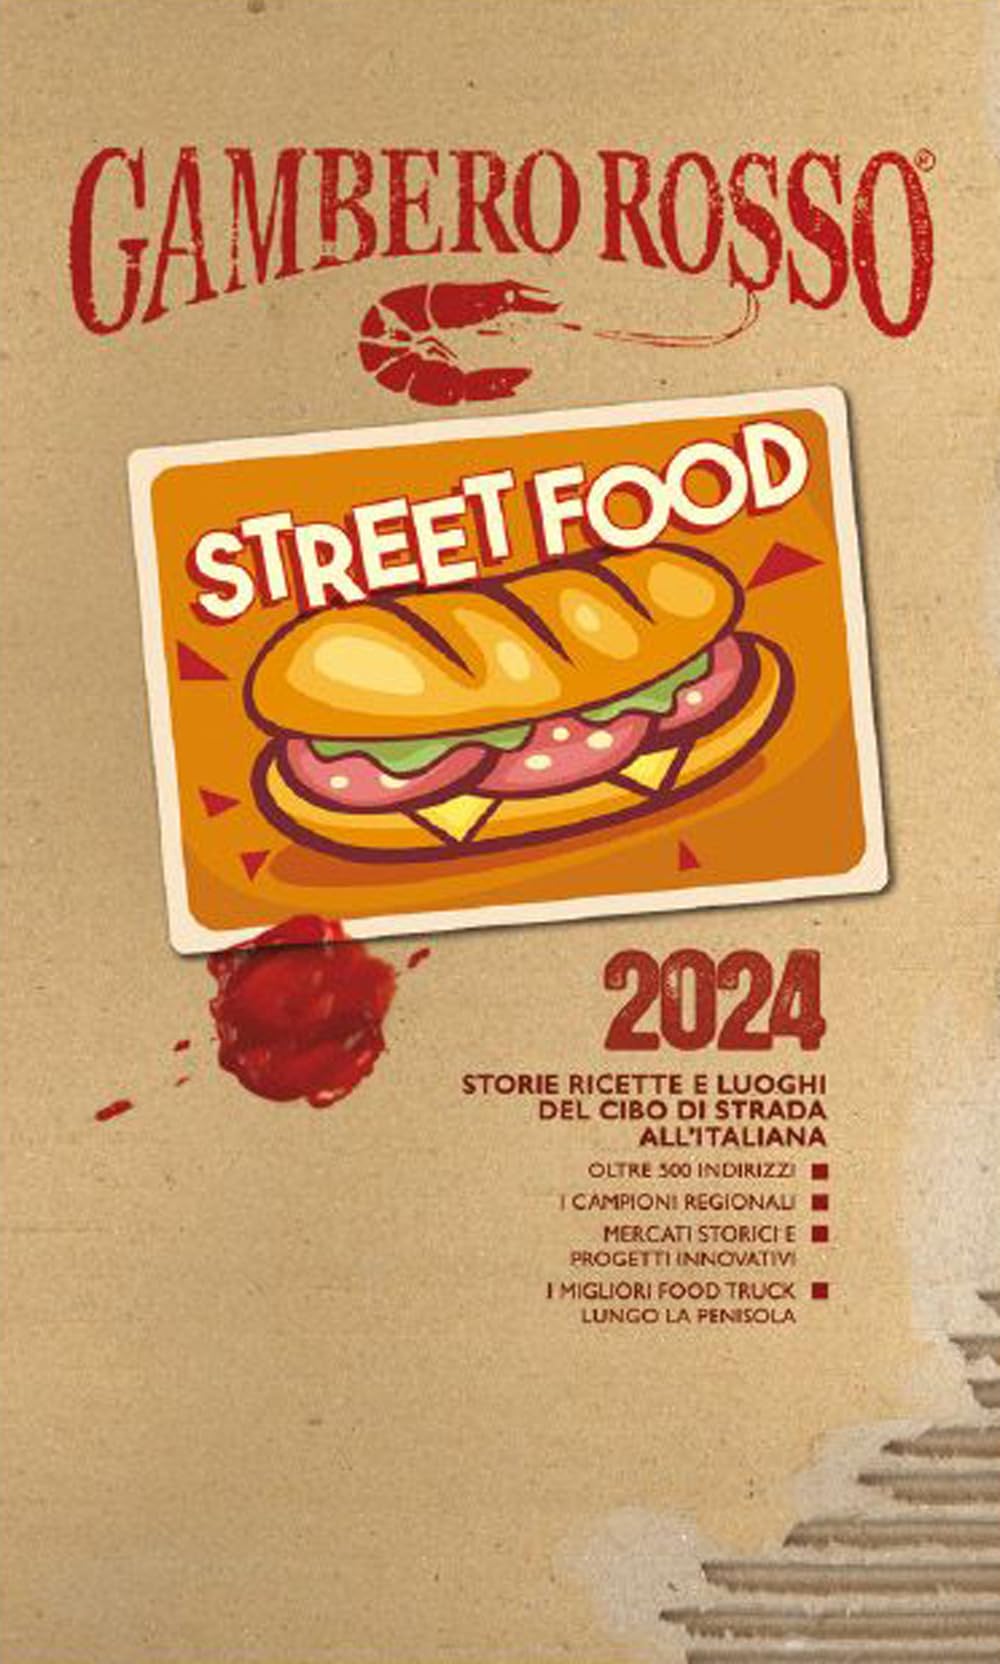 Street Food 2024 di Gambero Rosso – Recensione